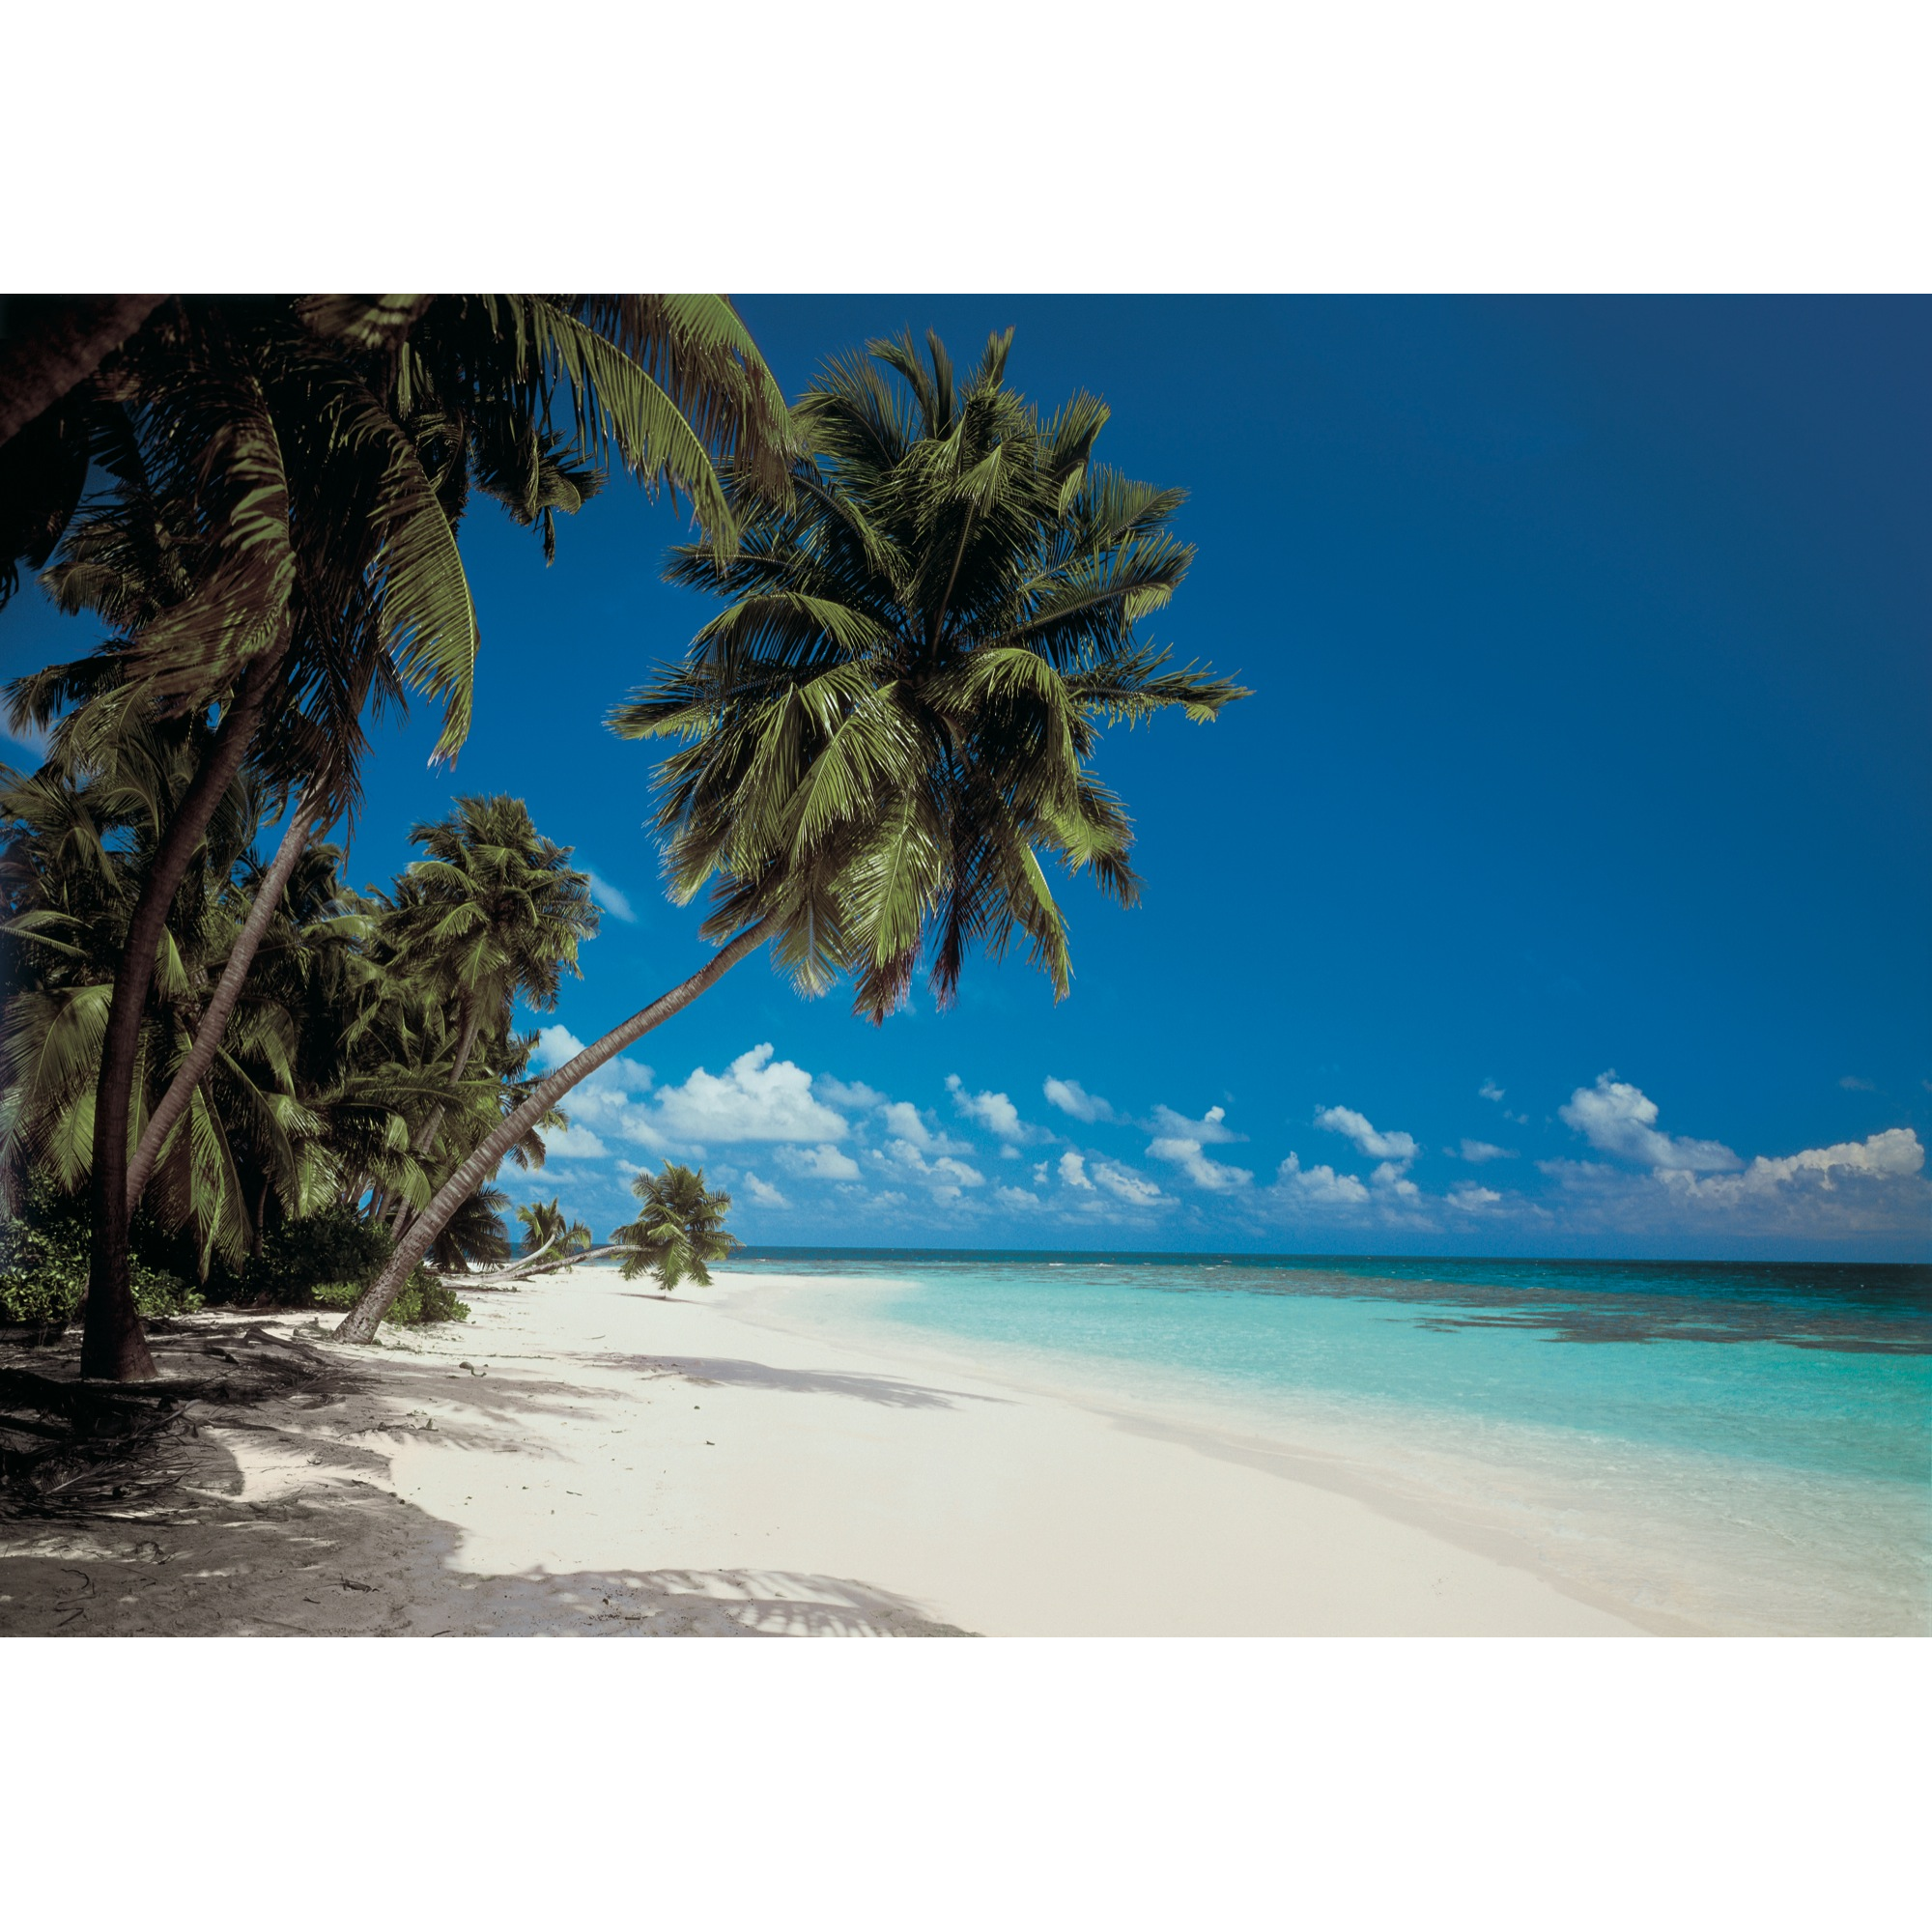 Fototapete 'Maledives' 388 x 270 cm + product picture